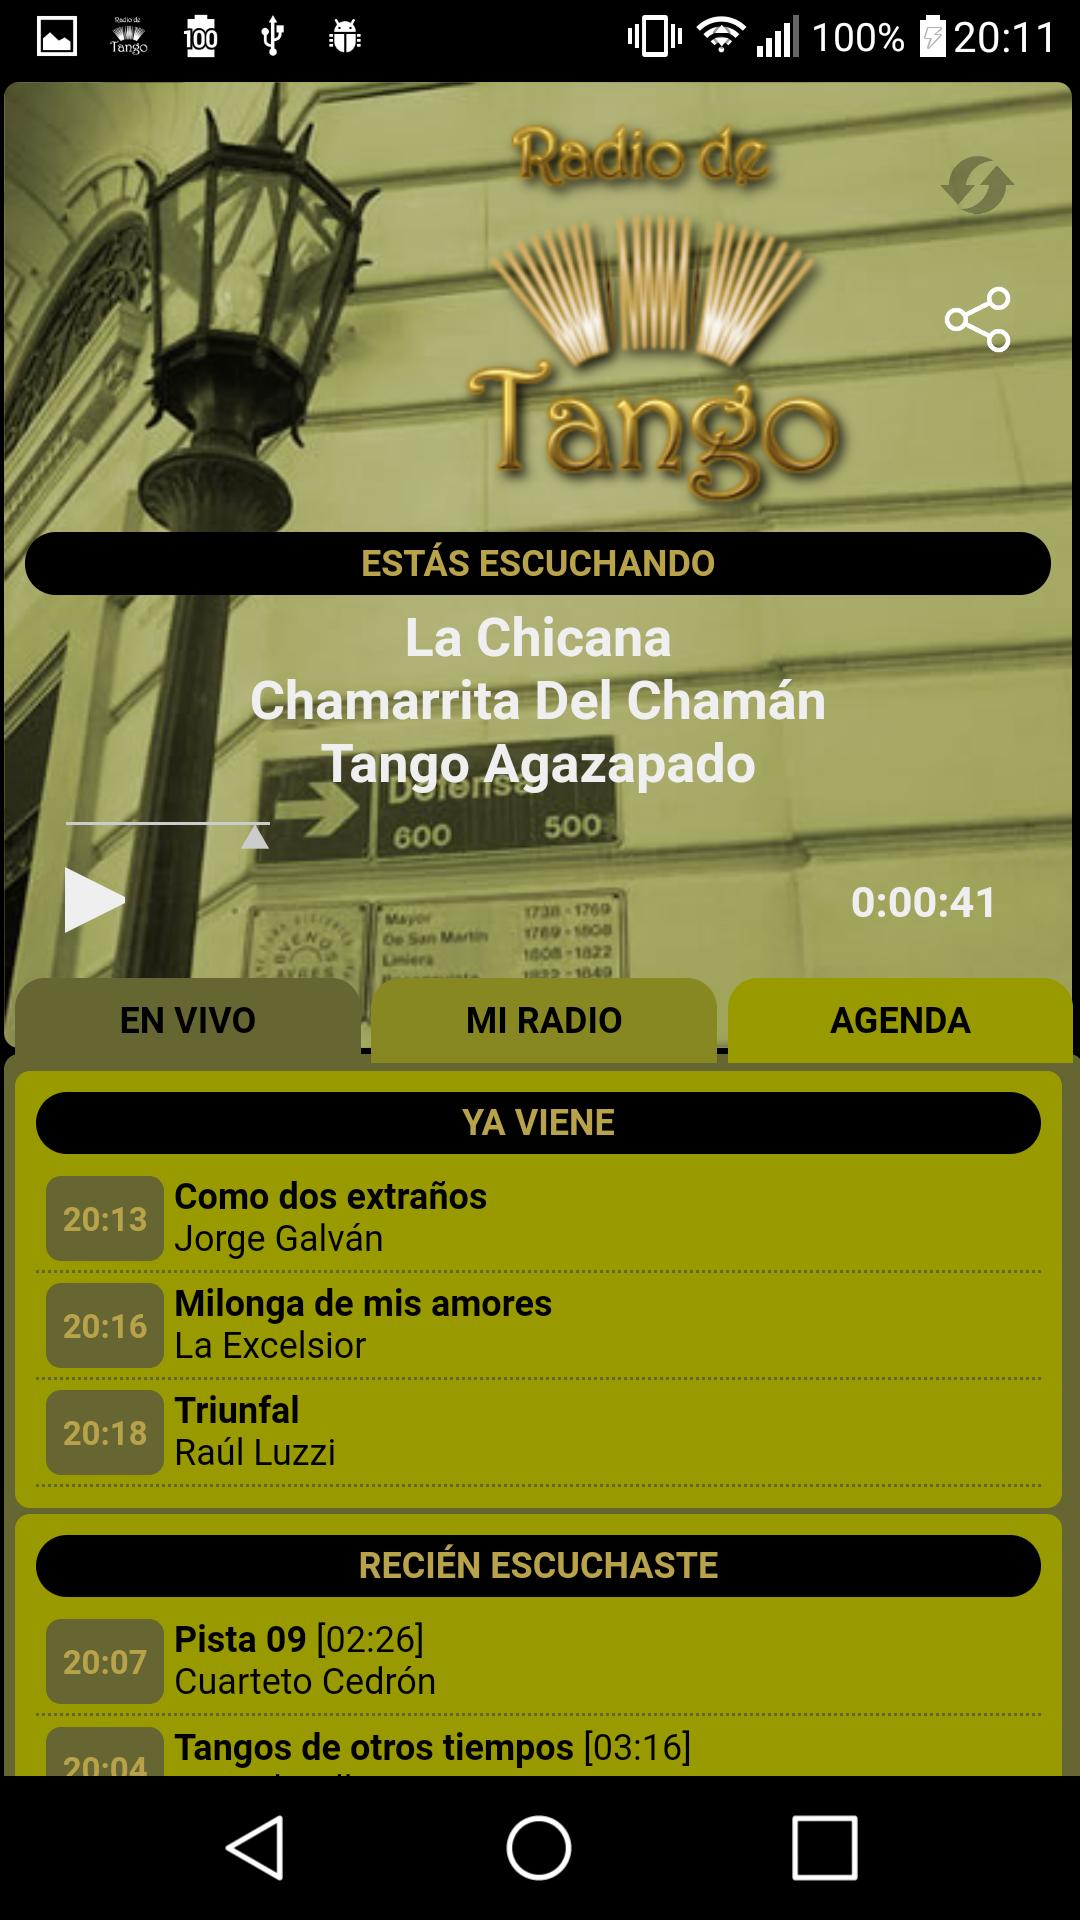 Radio de Tango for Android - APK Download